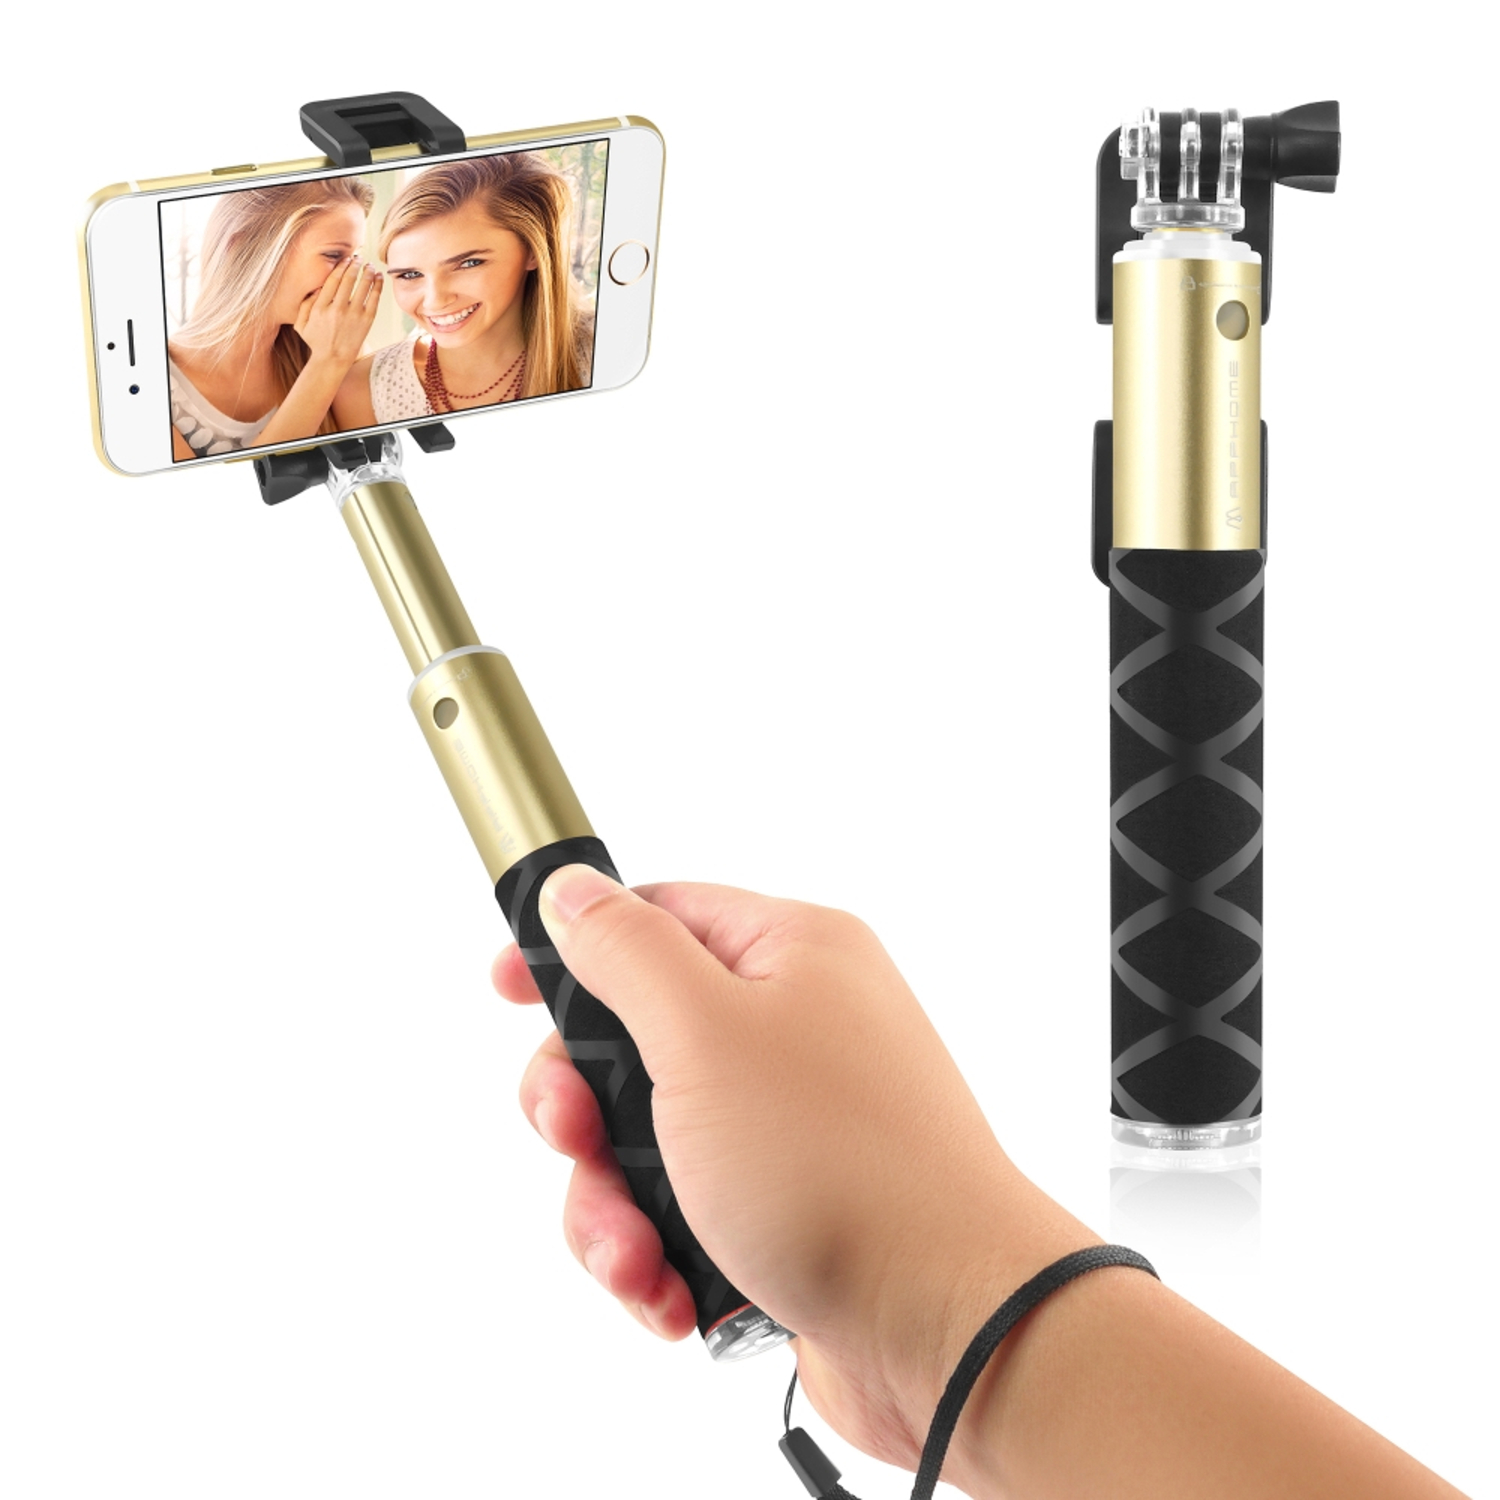 Insten Lightweight Pocket-Size Extendable Handheld Selfie Stick for iPhone Samsung Gopro & More Smartphones\/Cameras, Champagne Gold